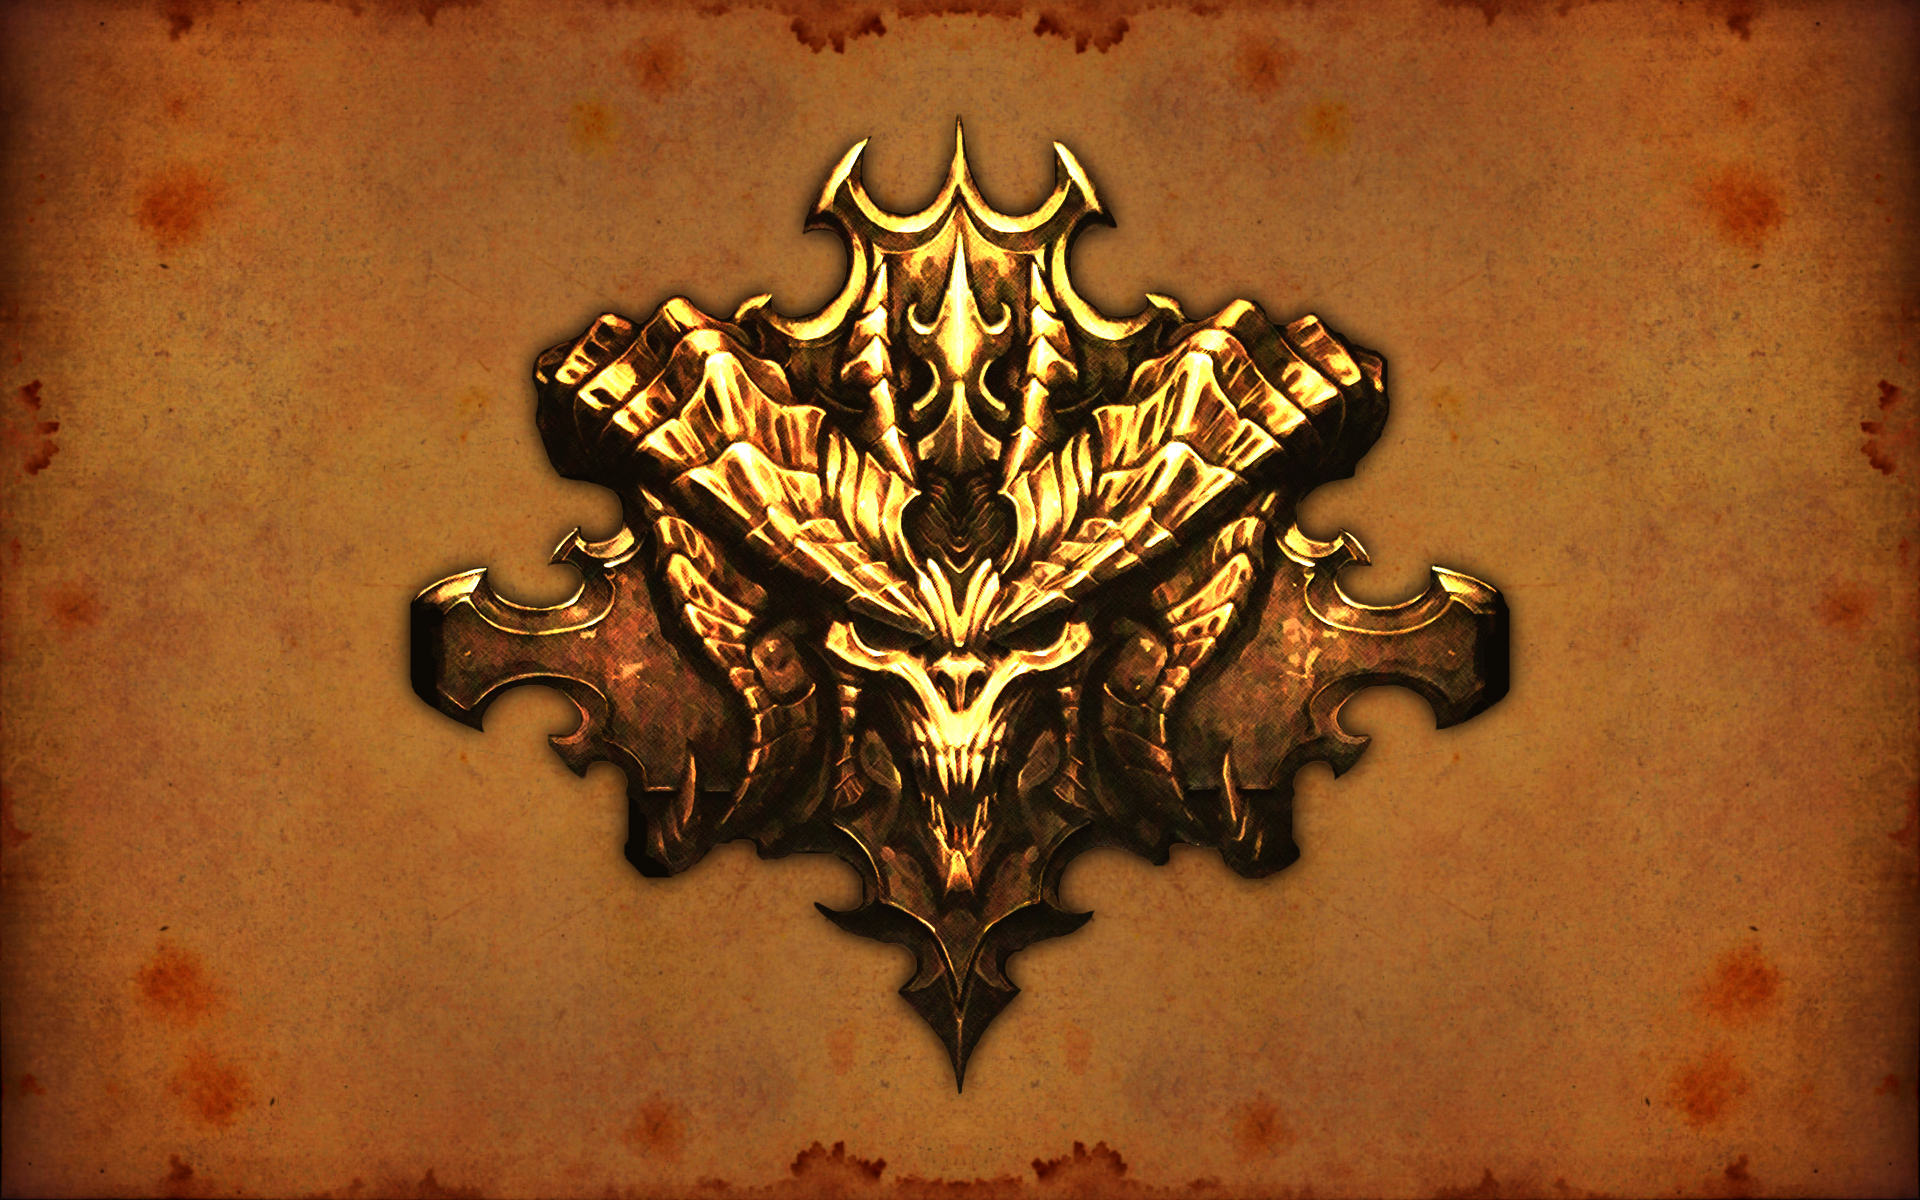 Download mobile wallpaper Diablo Iii, Diablo, Video Game for free.